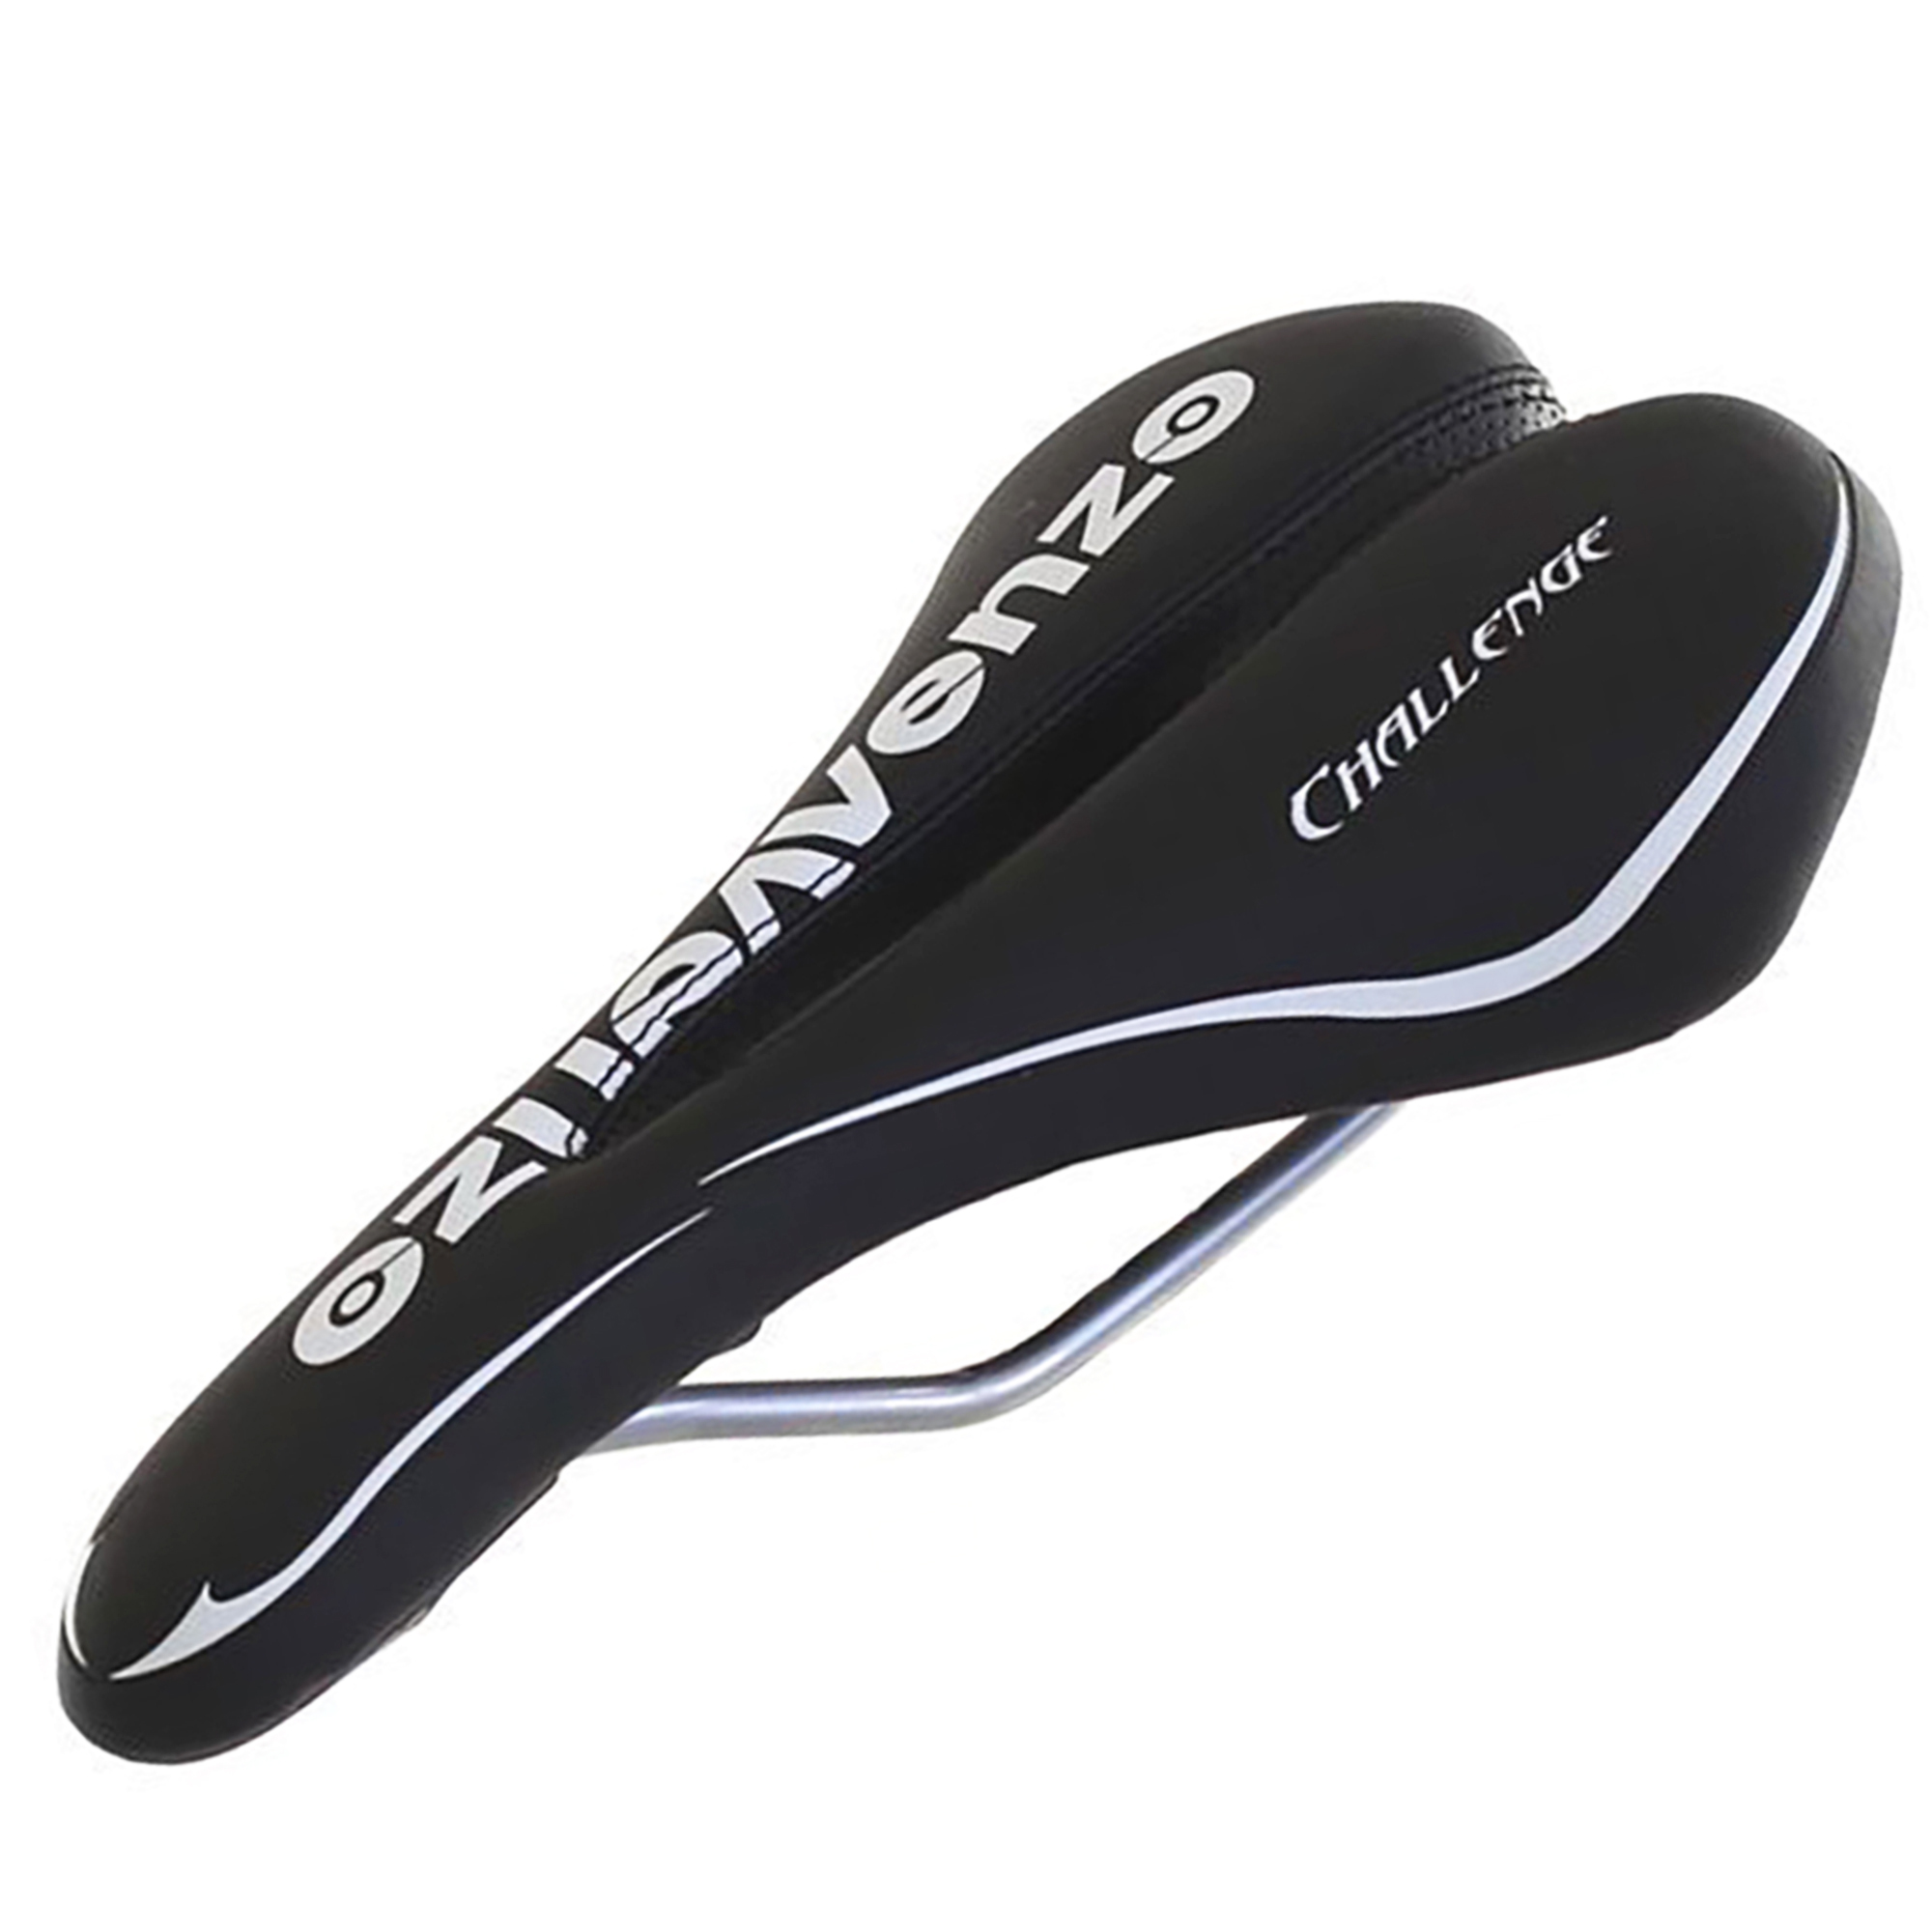 Venzo Professional  Soft Road MTB Bike Bicycle Saddles Seat Black